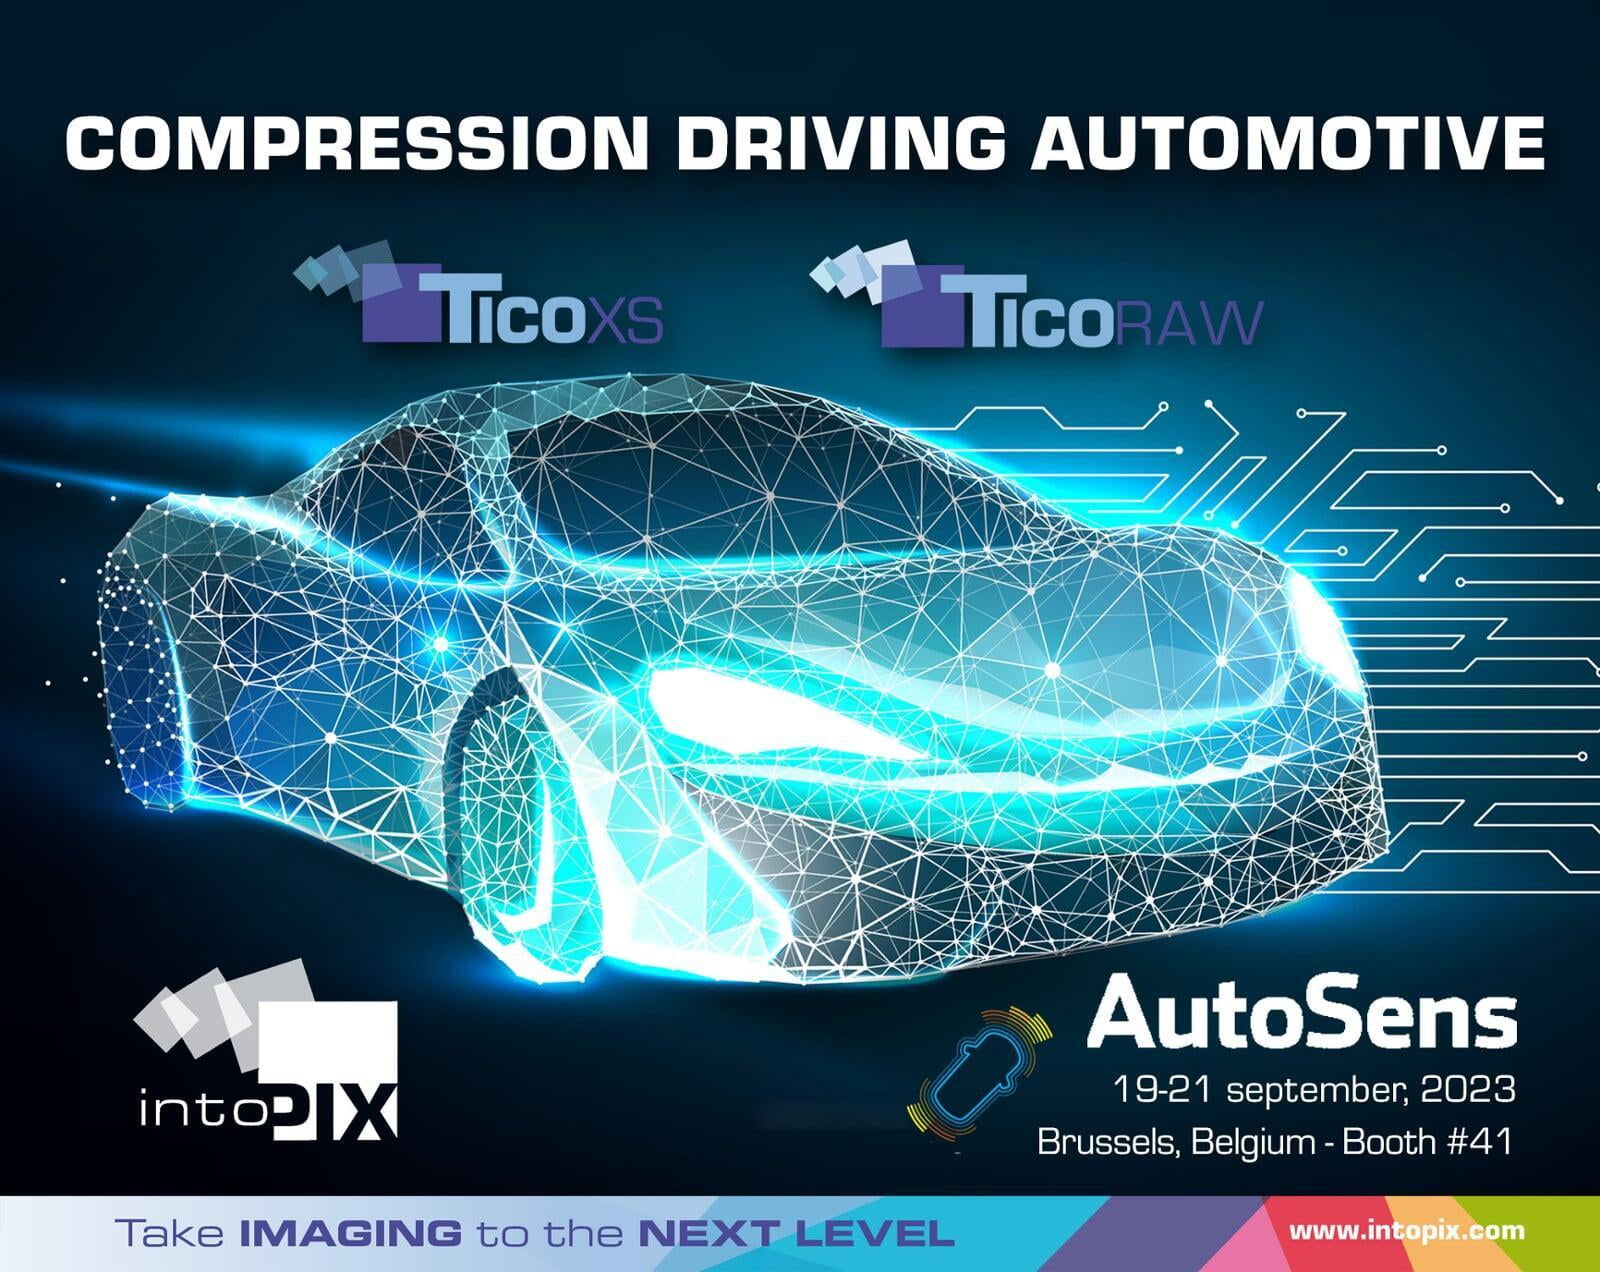 intoPIX 在 AutoSens 2023 展会上展示推动汽车创新的新型轻量级视频压缩标准和技术